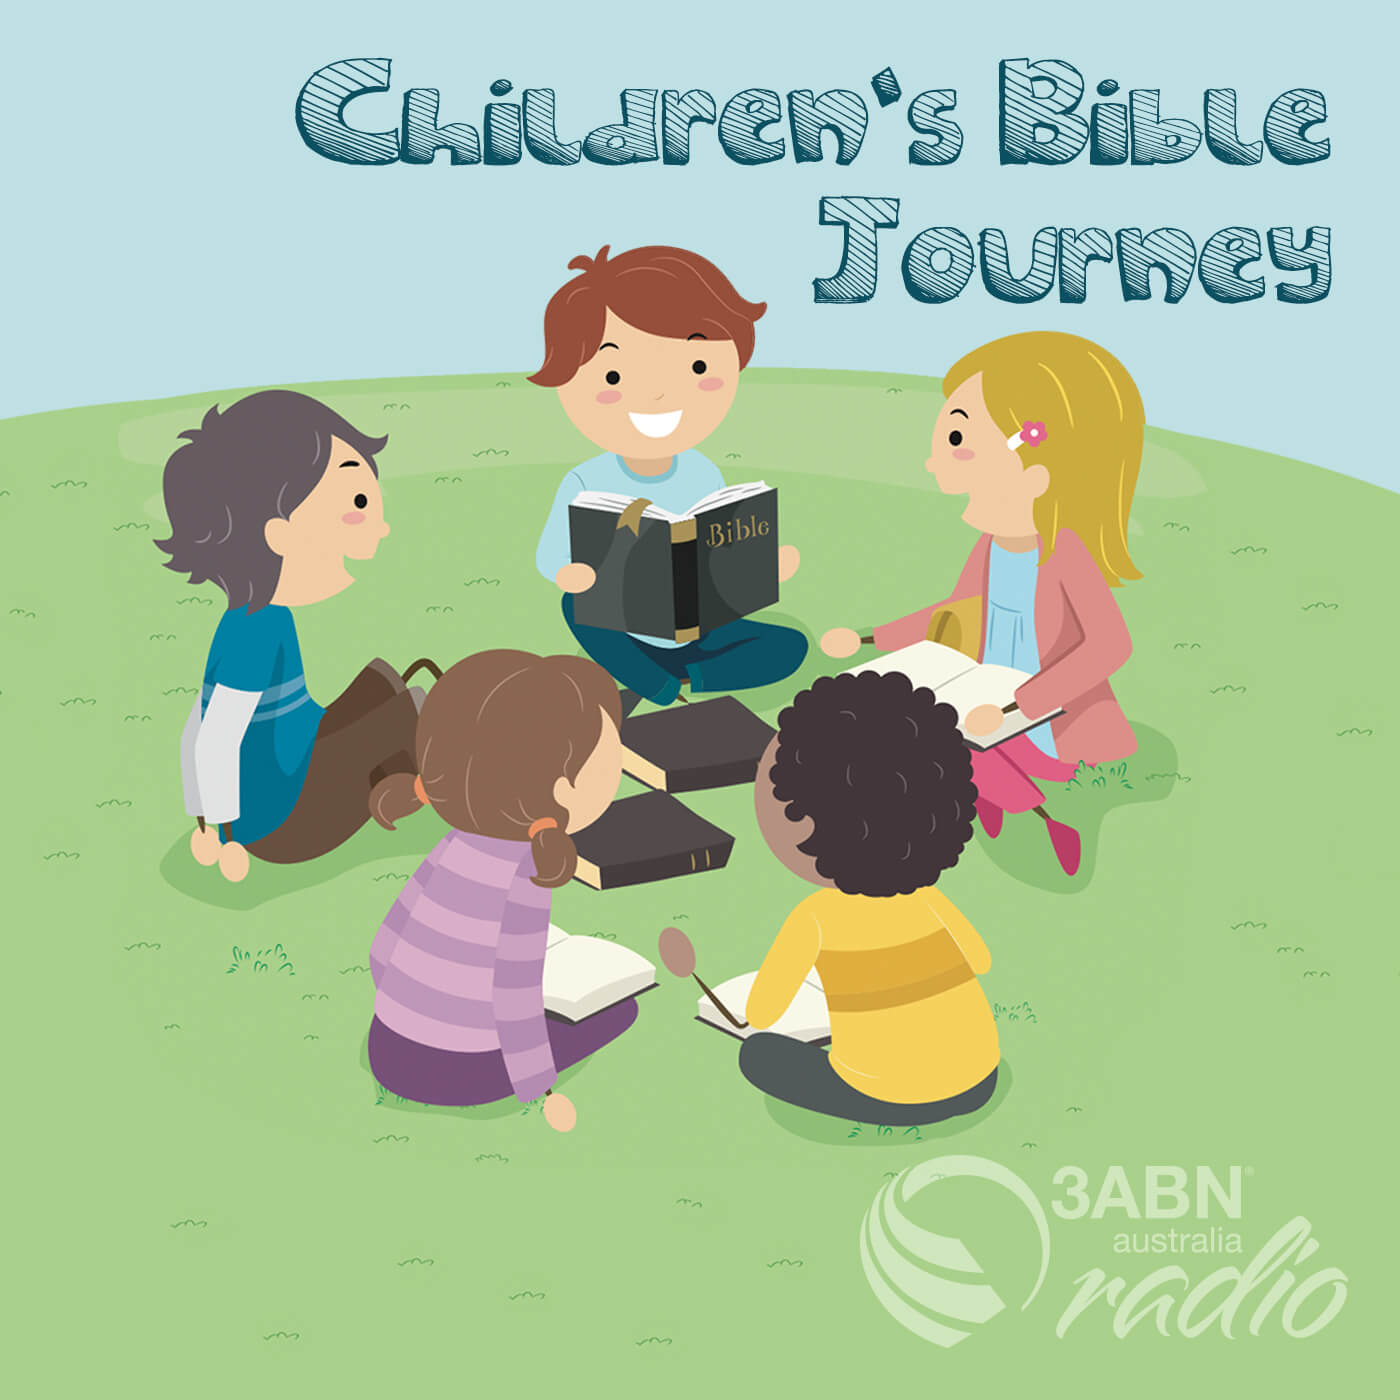 Children's Bible Journey - 2009